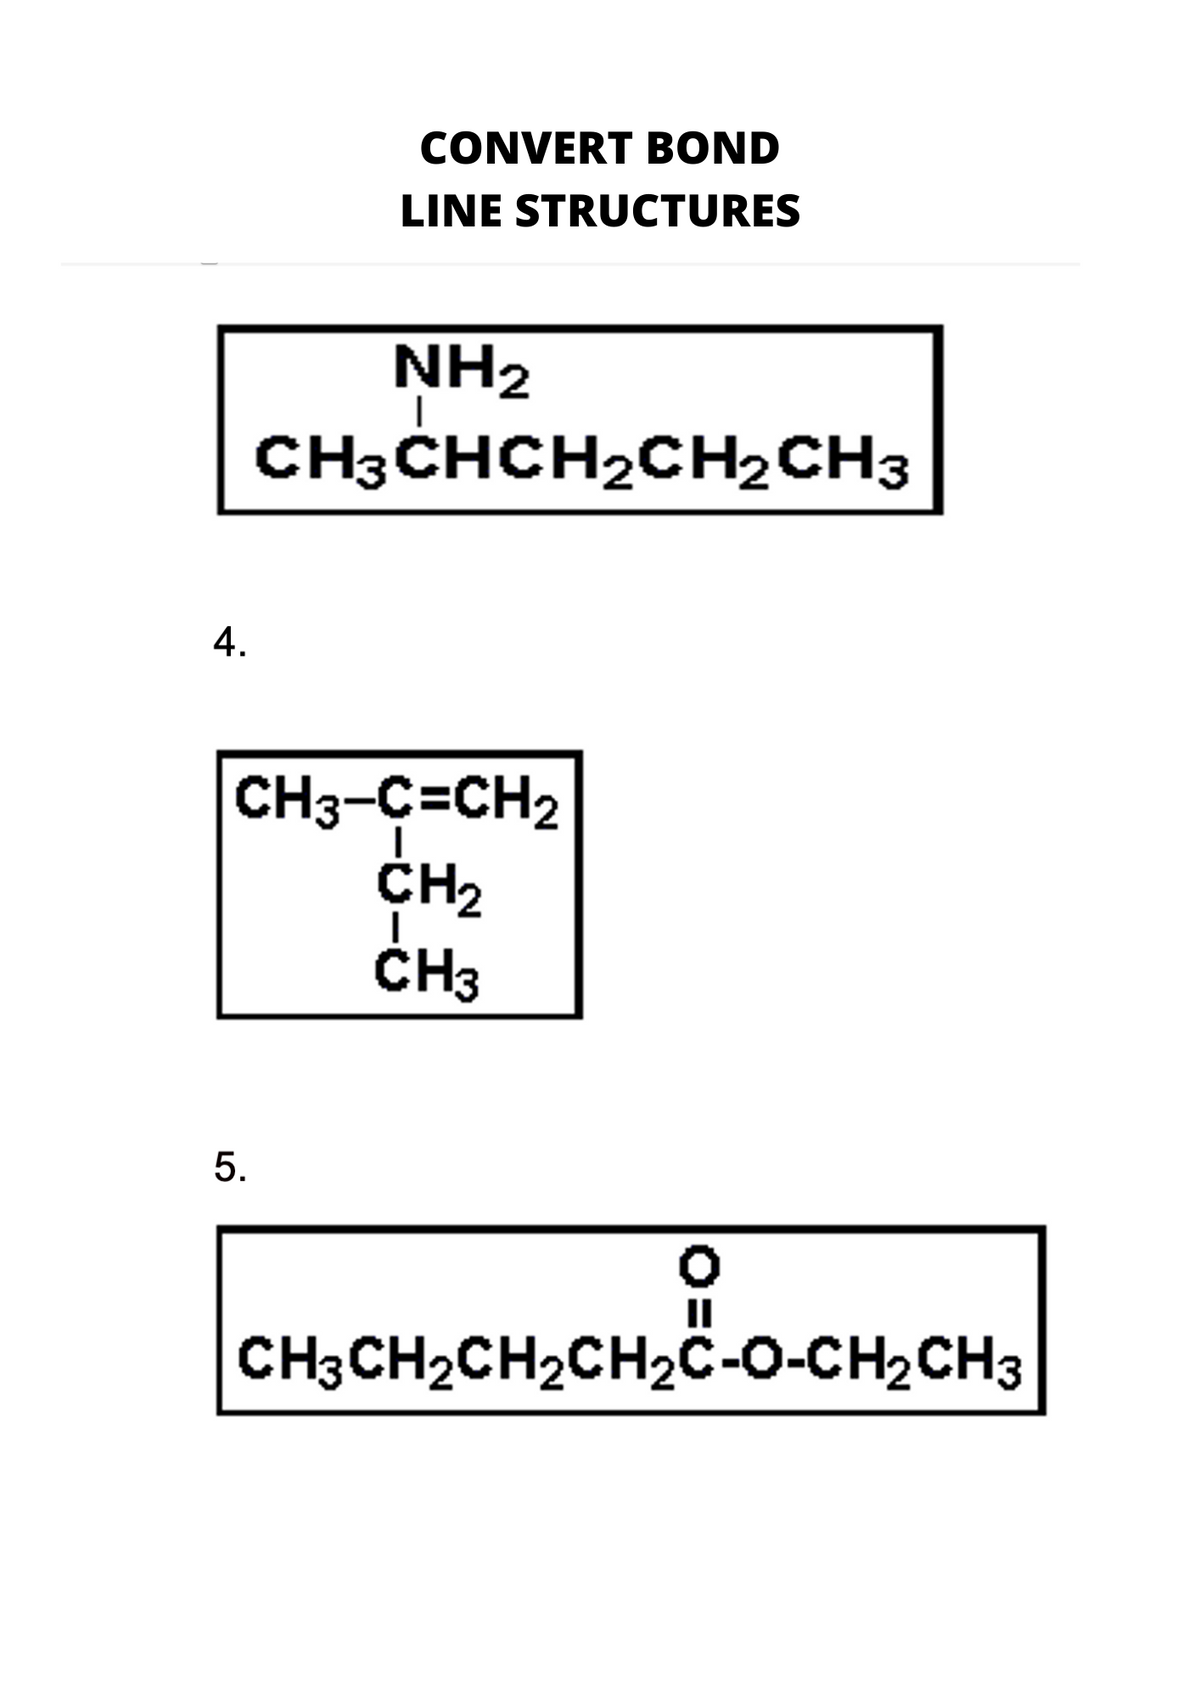 CONVERT BOND
LINE STRUCTURES
NH2
CH3CHCH2CH2CH3
4.
CH3-C=CH2
CH2
CH3
5.
CH3CH2CH2CH2C-o-CH2CH3
